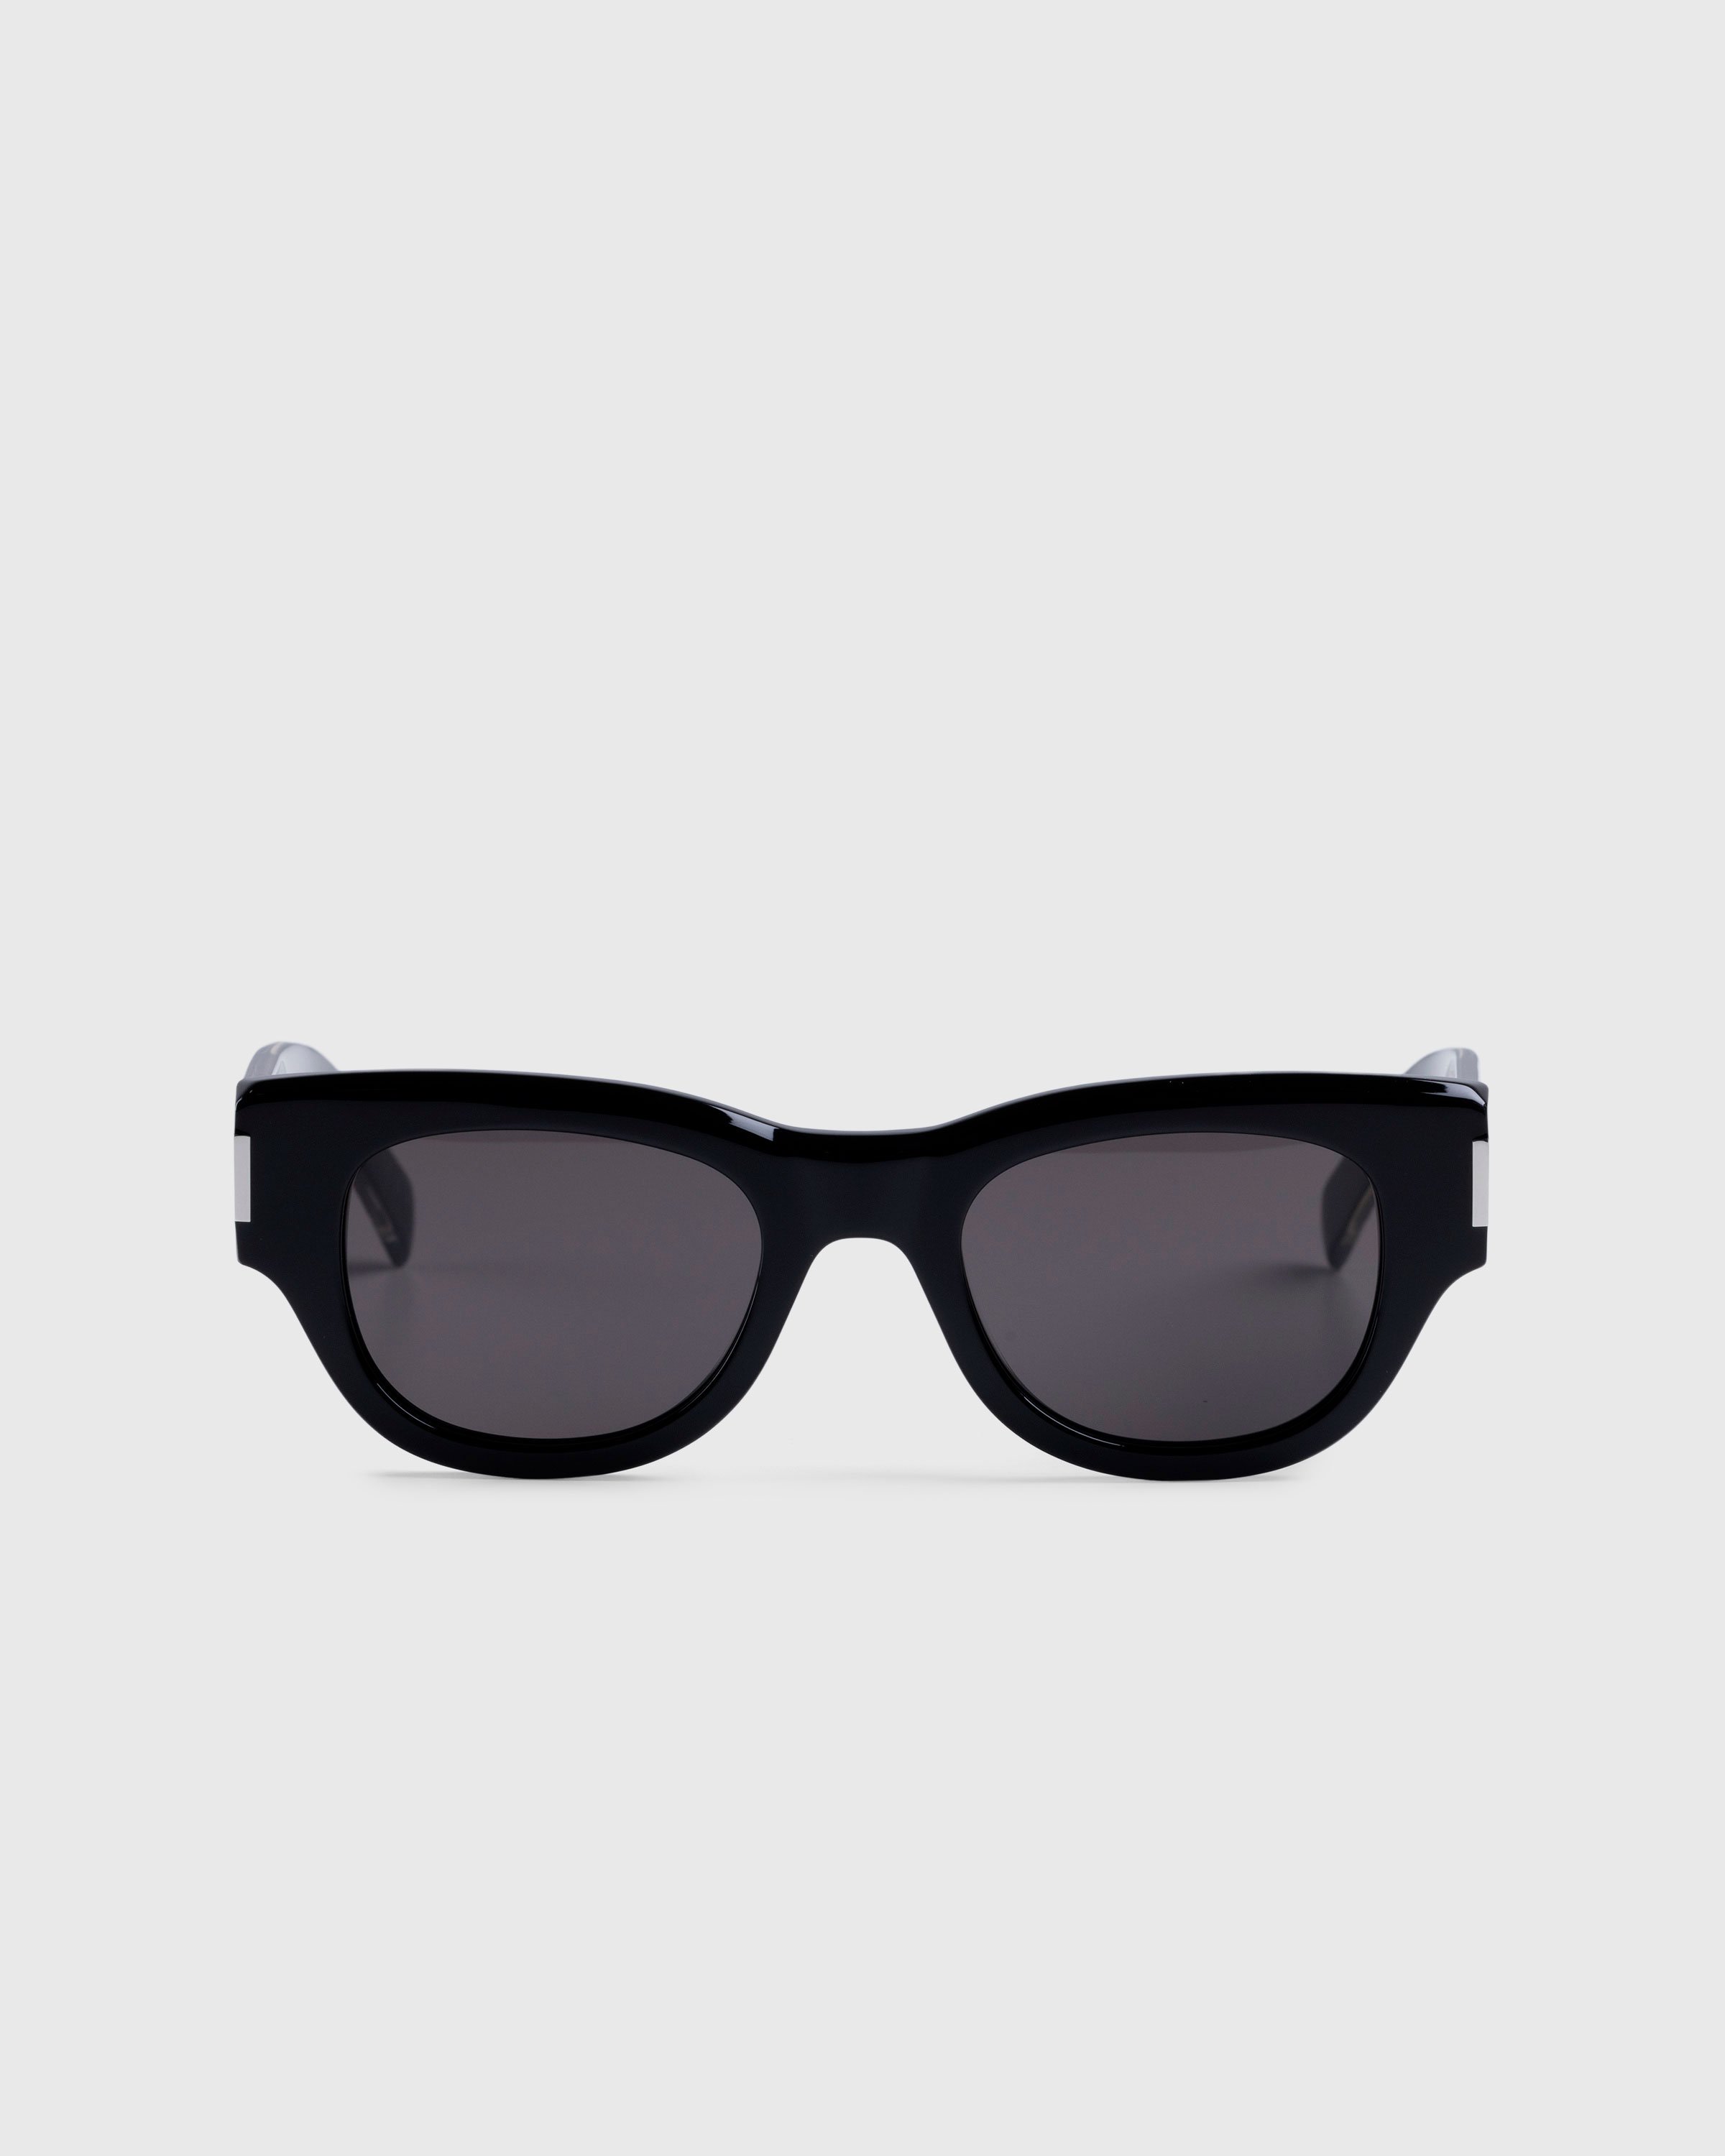 Saint Laurent - SL 573 Cat Eye Sunglasses Black/Crystal/Grey - Accessories - Multi - Image 1